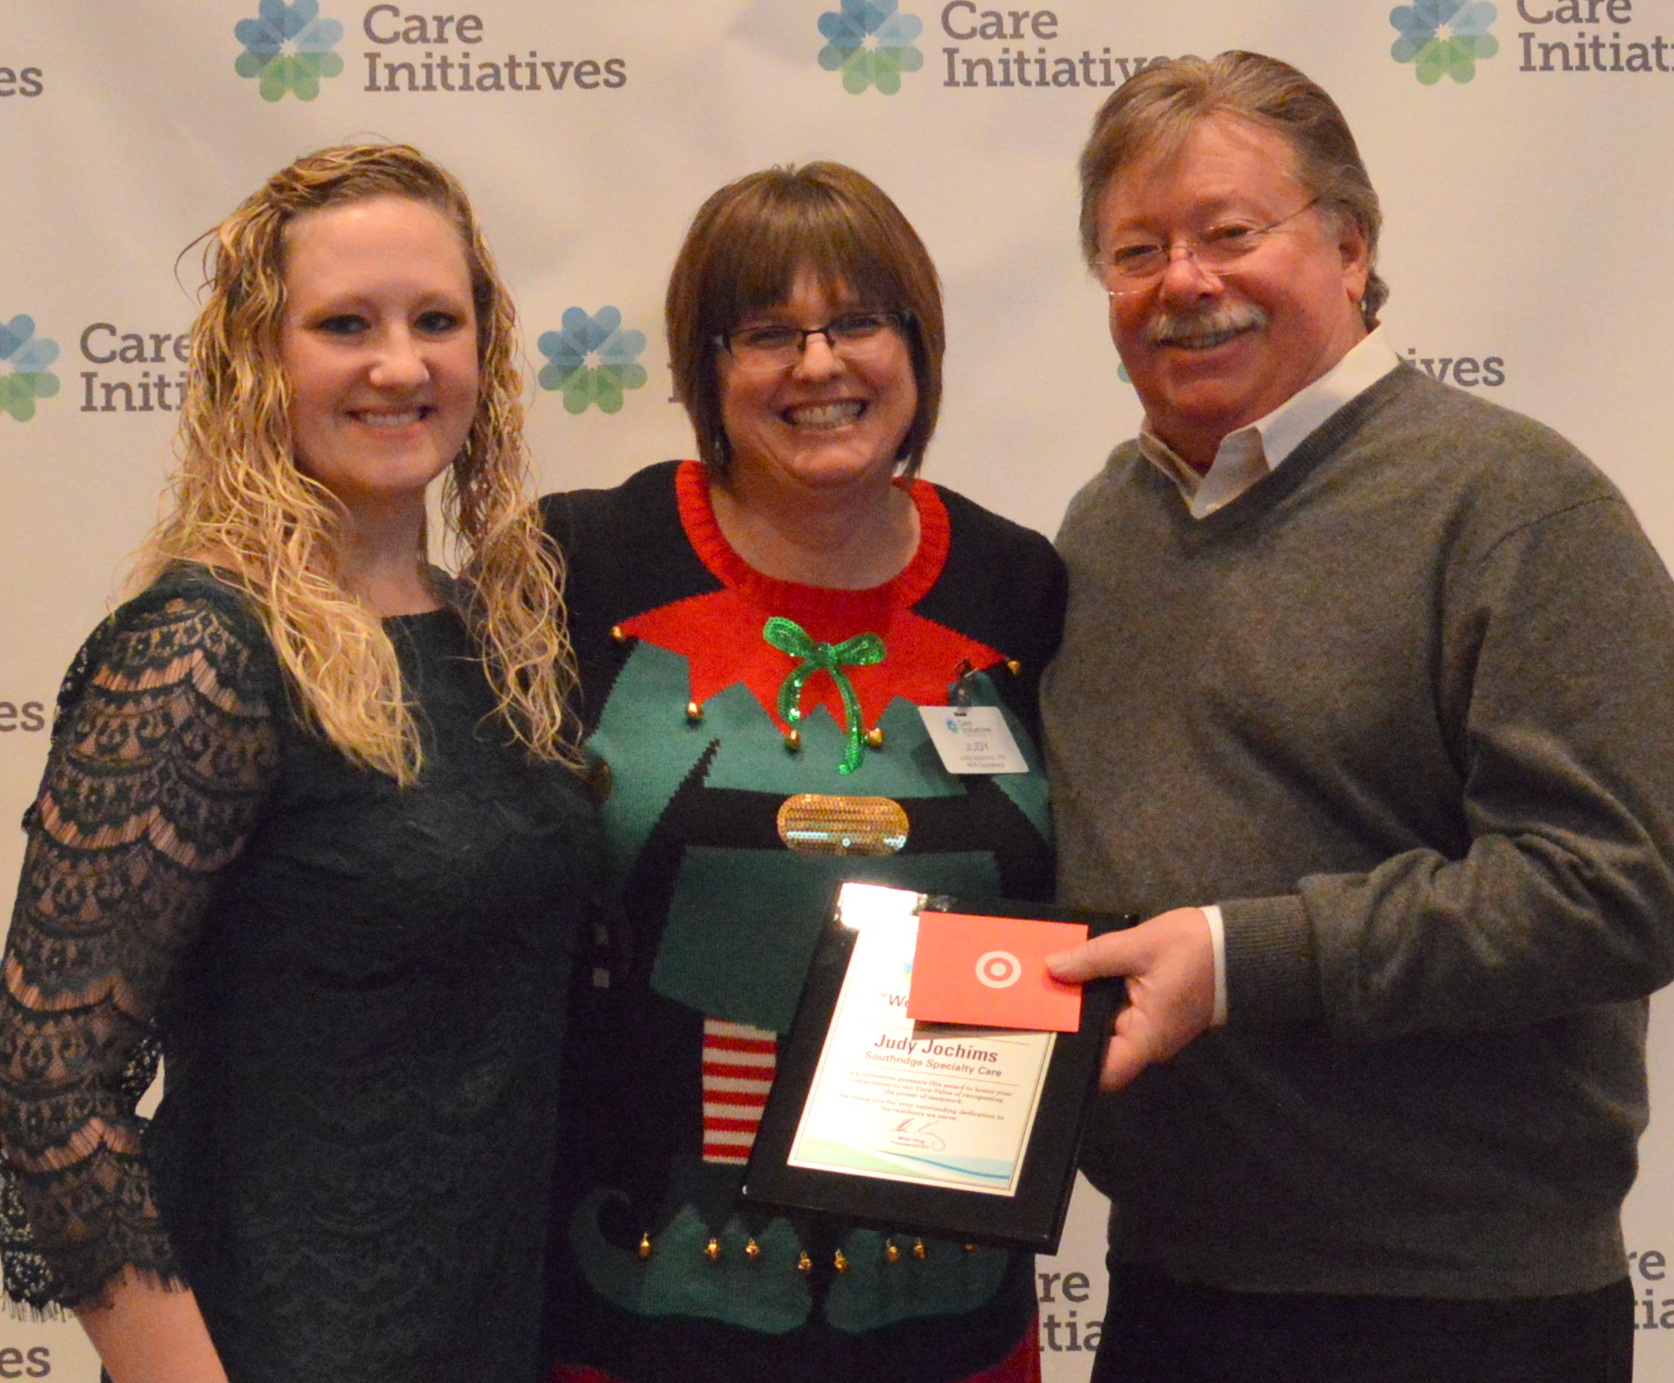 Work as a Team Award, Judy Jochims, Southridge Specialty Care